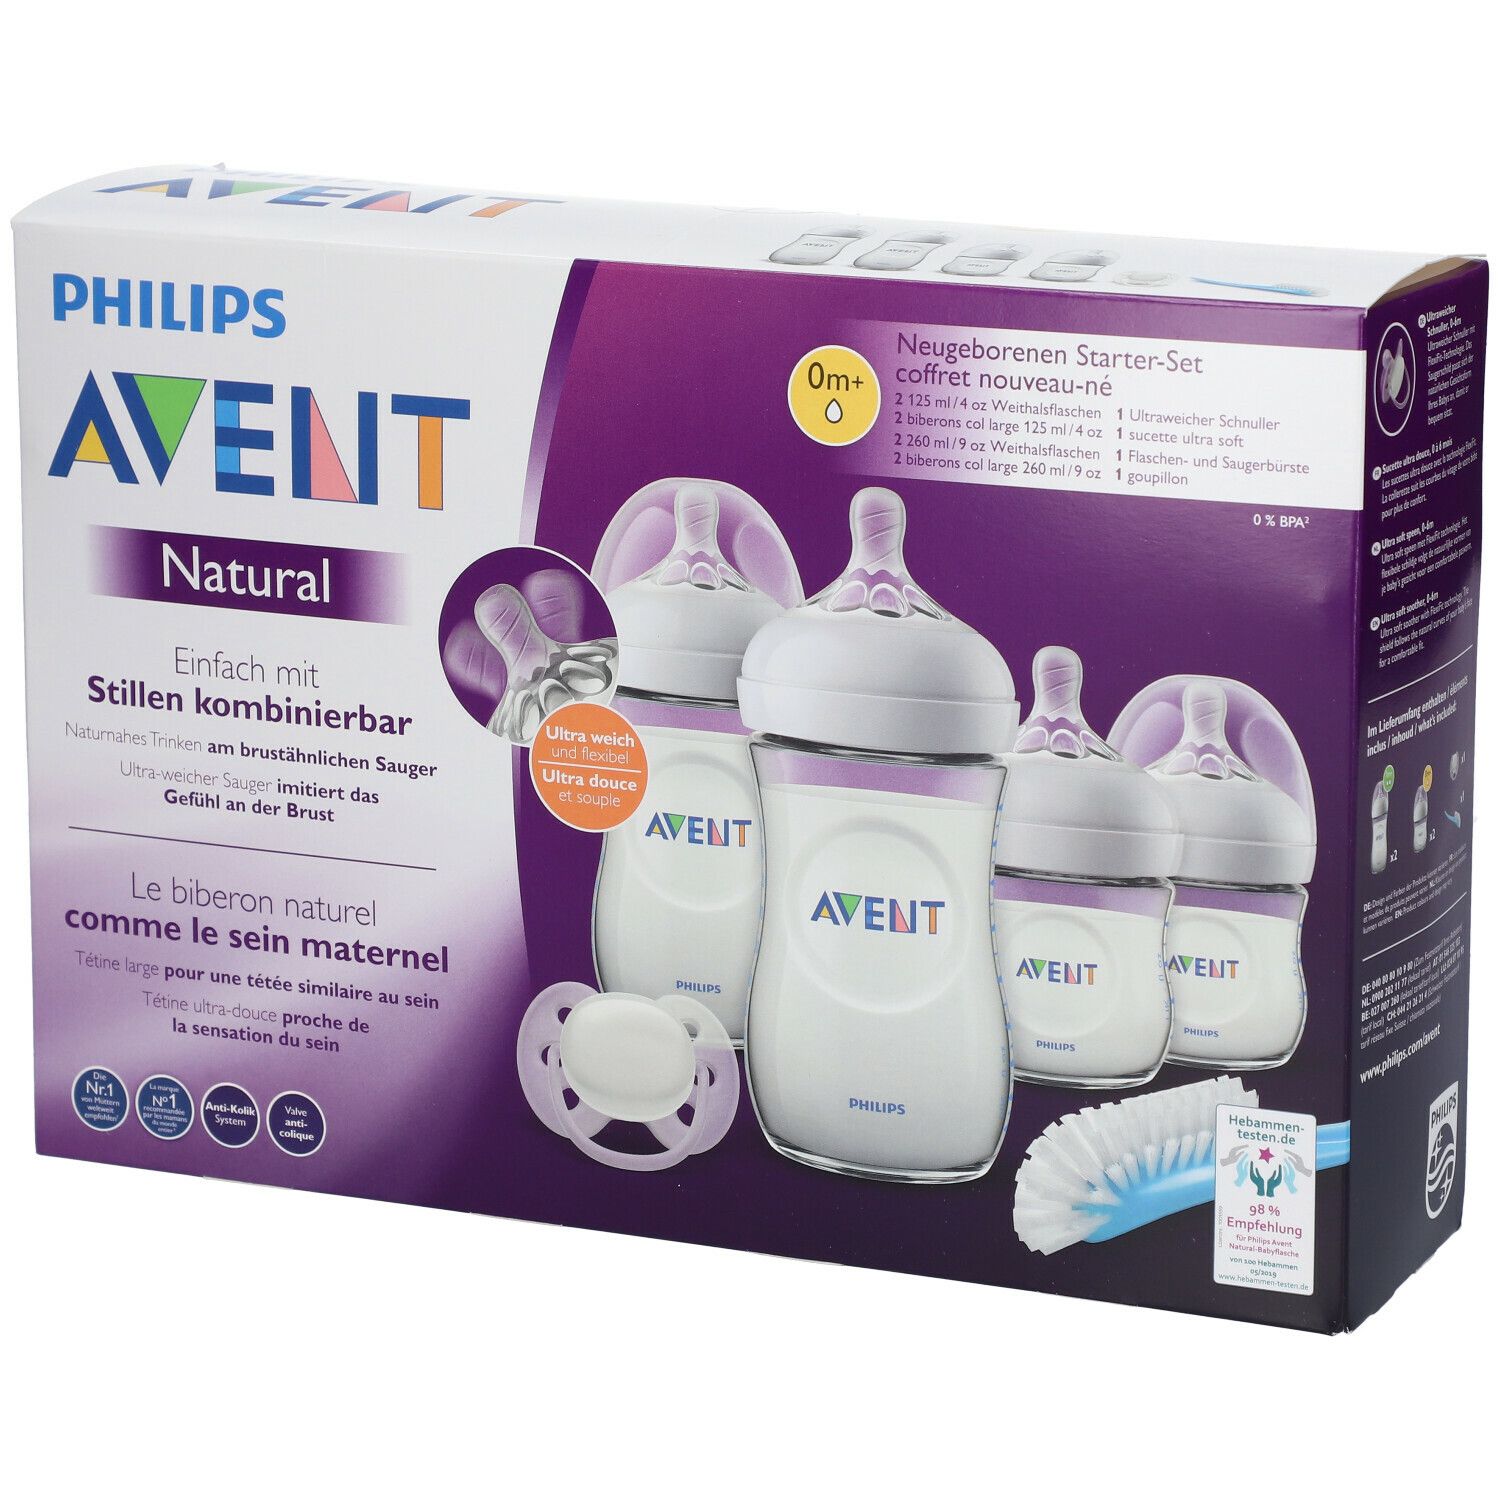 Image of Philips® AVENT Natural-Neugeborenen Starterset